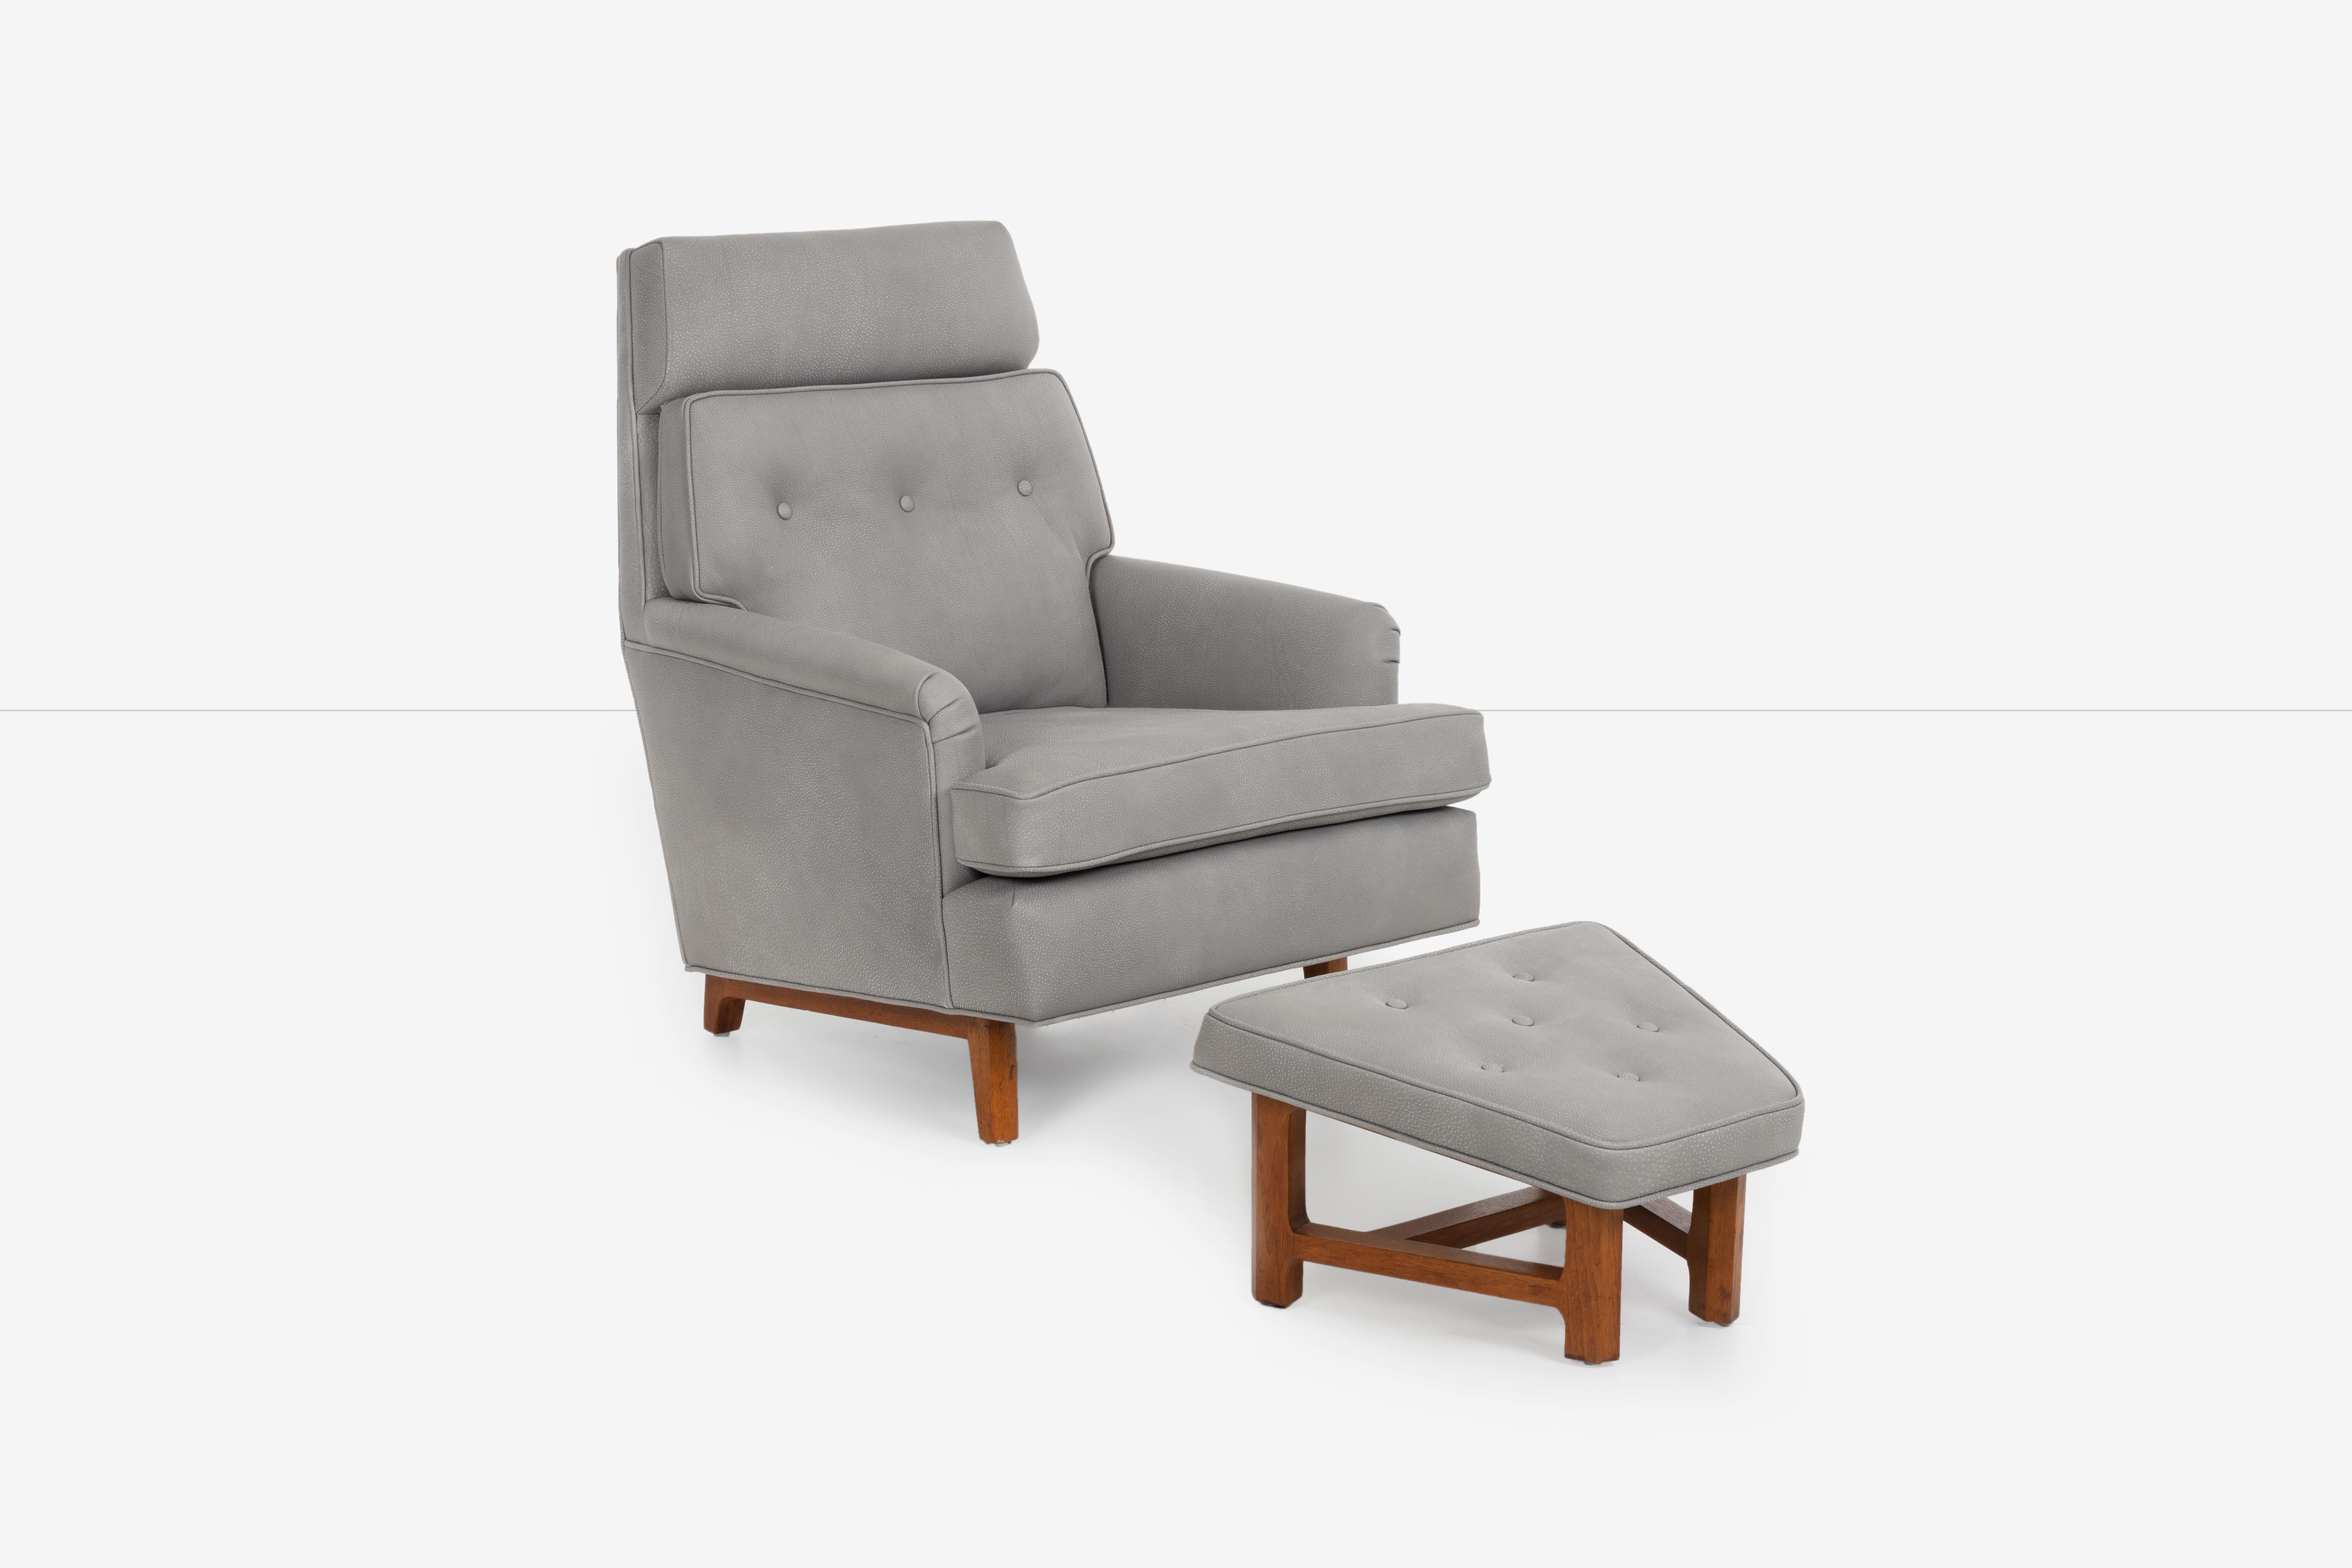 Mid-20th Century Edward Wormley for Dunbar Janus Lounge Chair and Ottoman